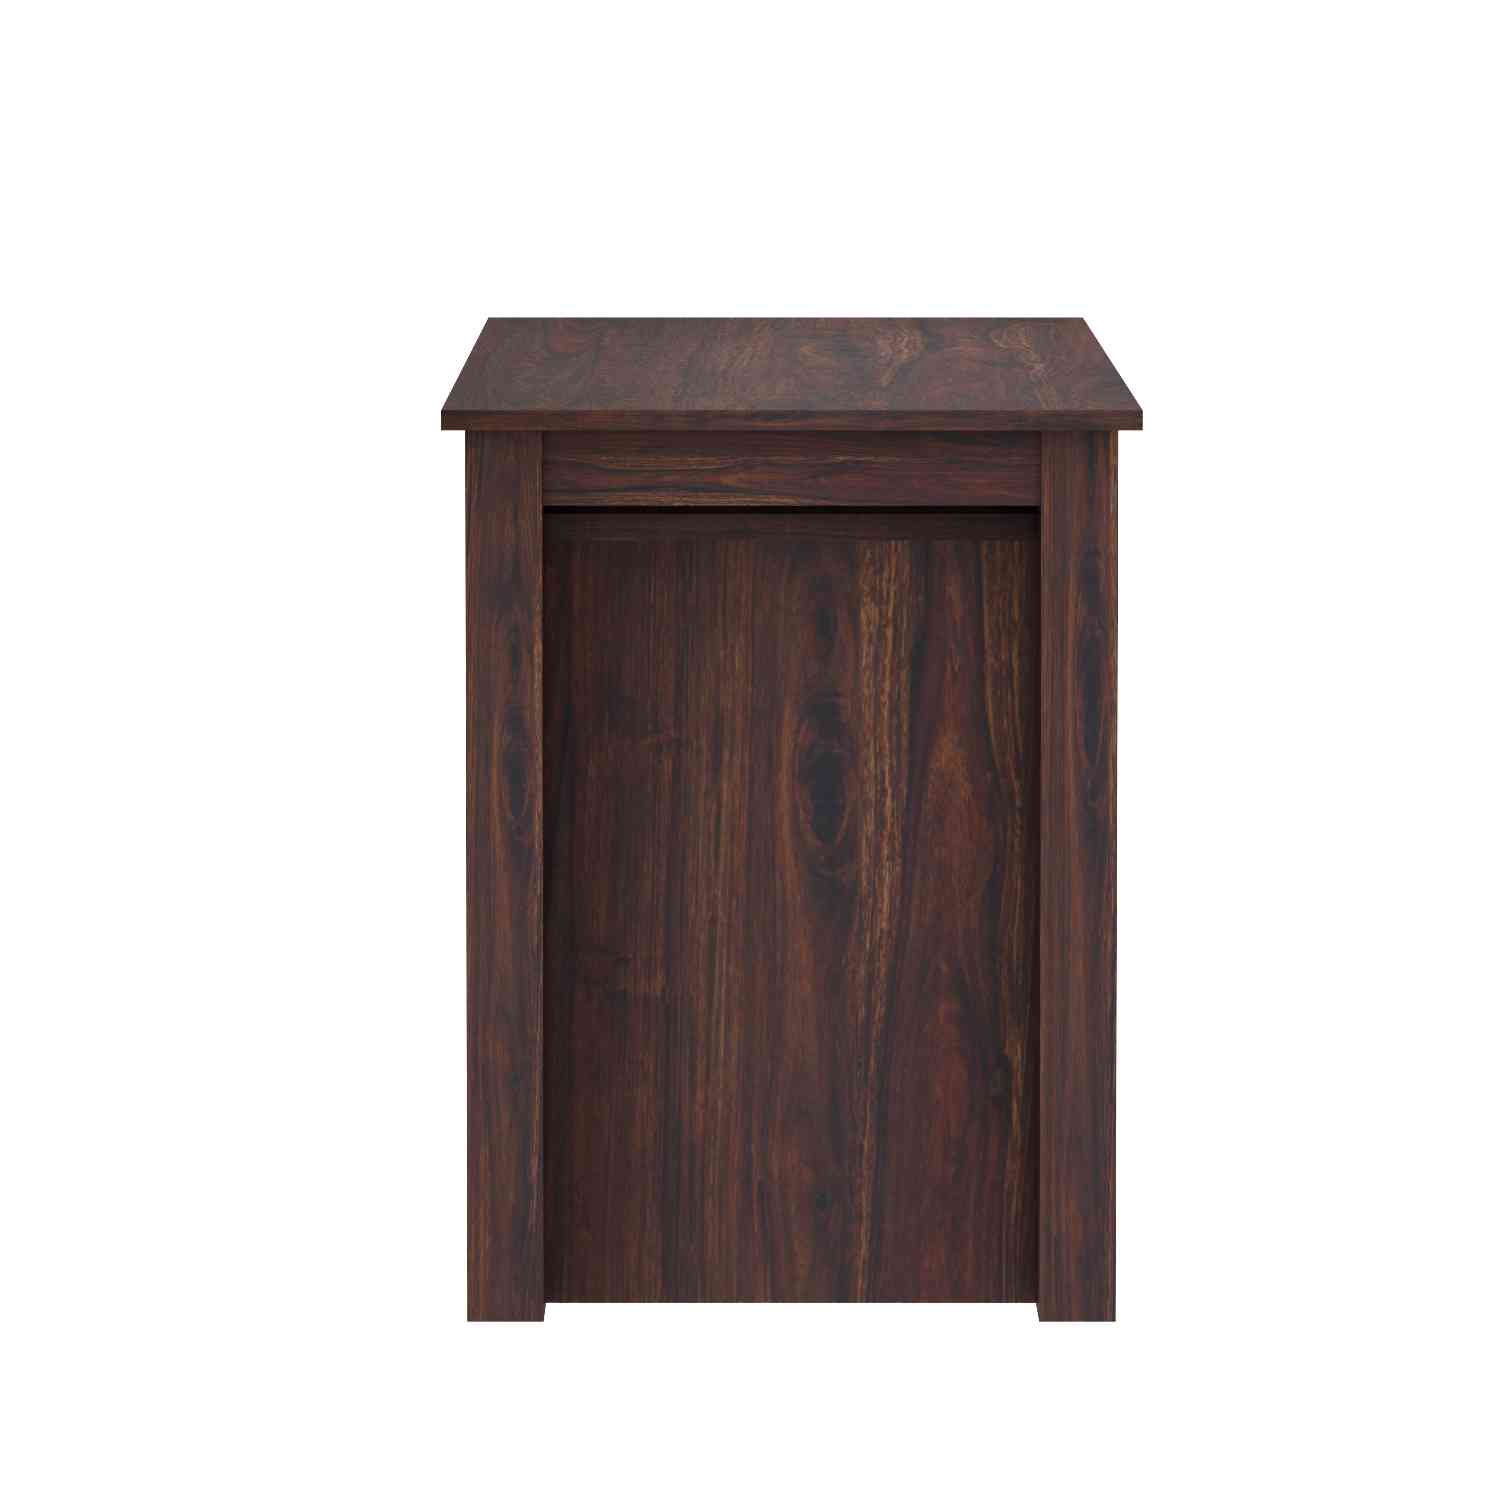 Fusta Solid Sheesham Wood Study Table With Storage (Walnut Finish)